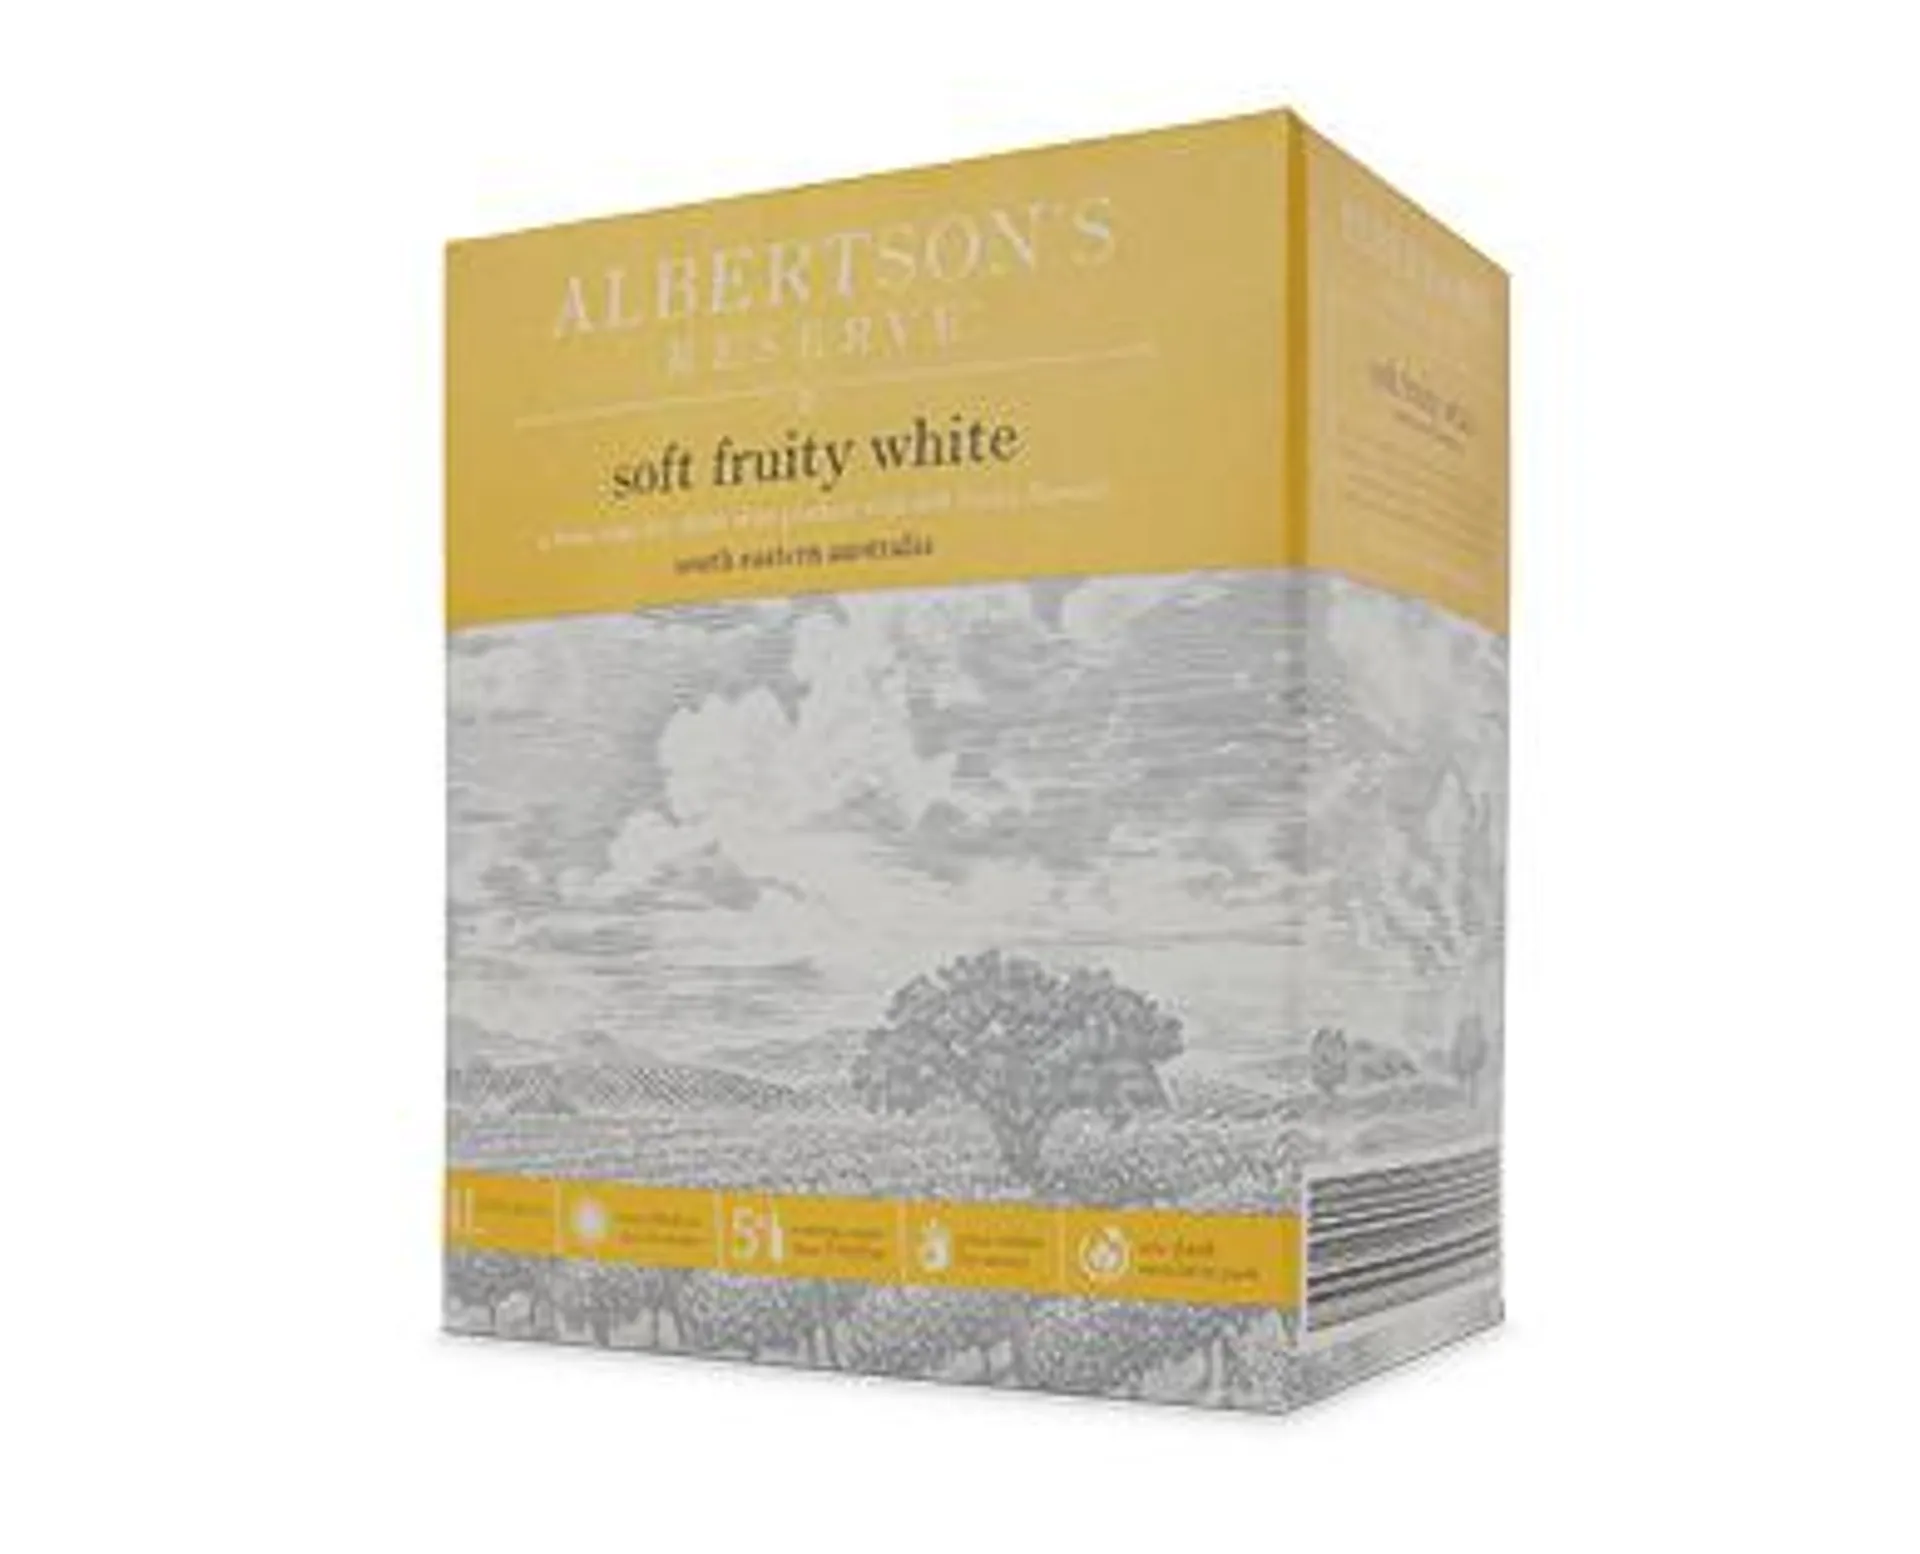 Albertson's Reserve Soft Fruity White Cask 4L